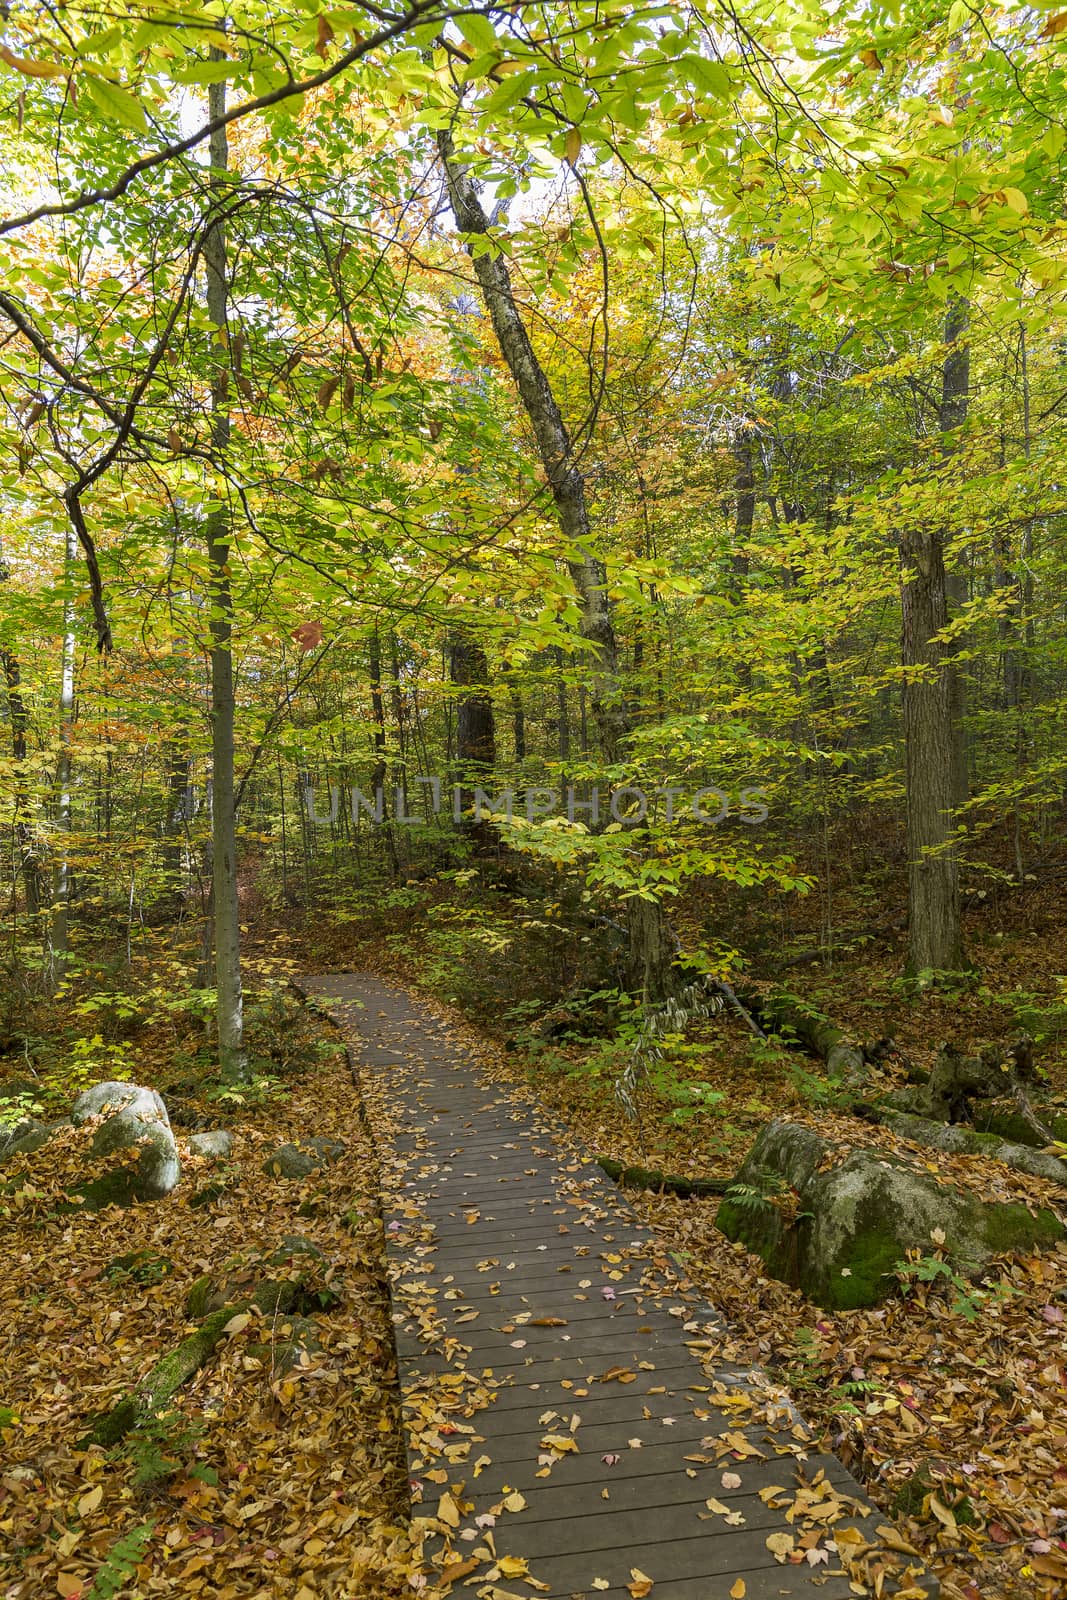 Boardwalk through a fall forest - Algonquin Provincial Park, Ontario, Canada